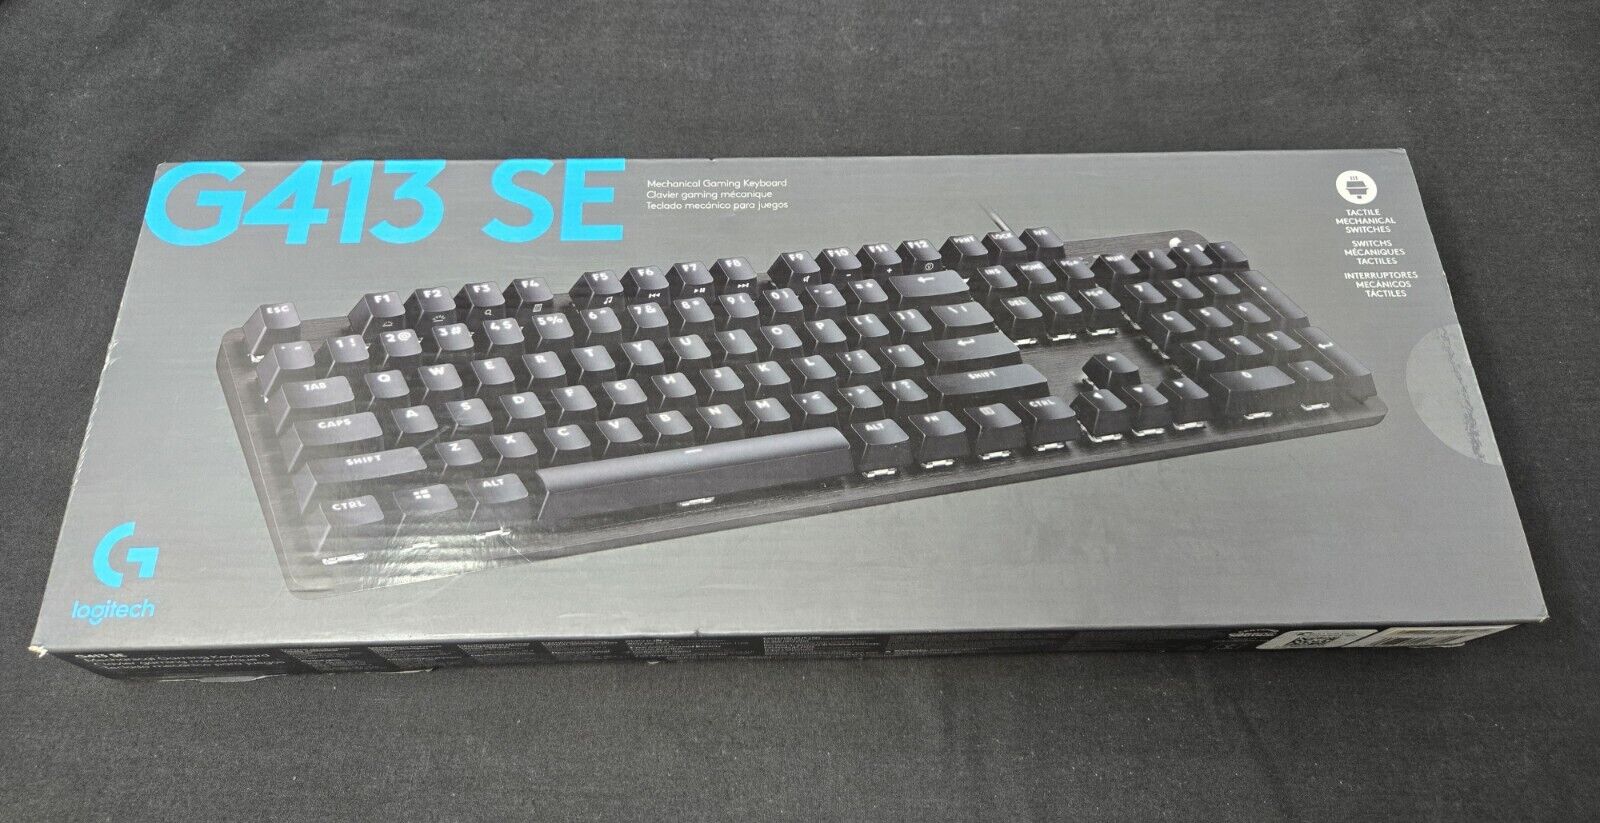 Logitech G413 SE Backlit Full Size Mechanical Gaming Keyboard